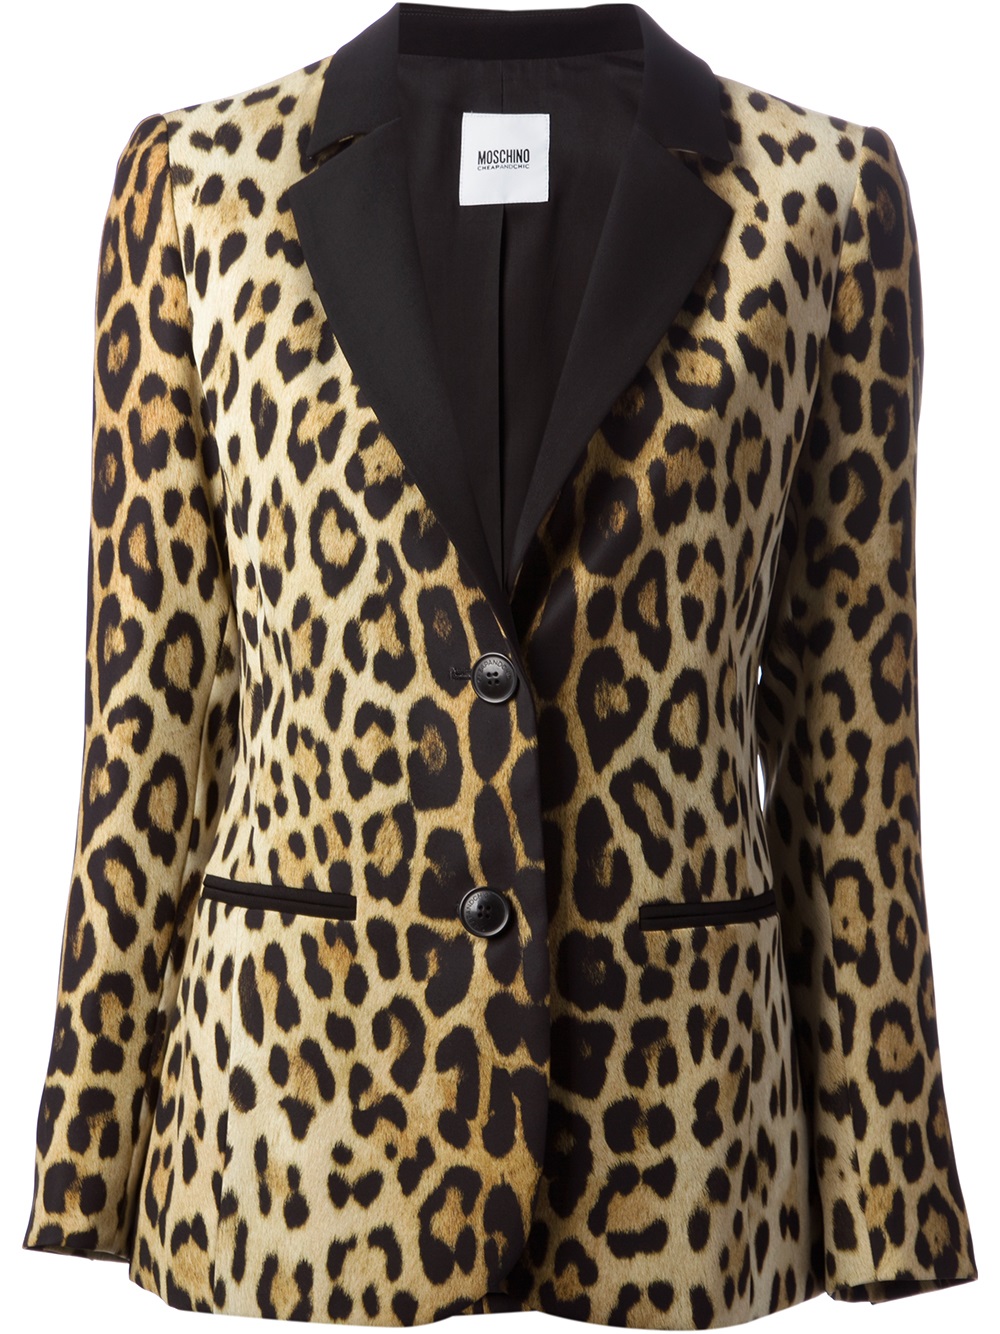 Lyst - Boutique Moschino Leopard Print Blazer in Natural